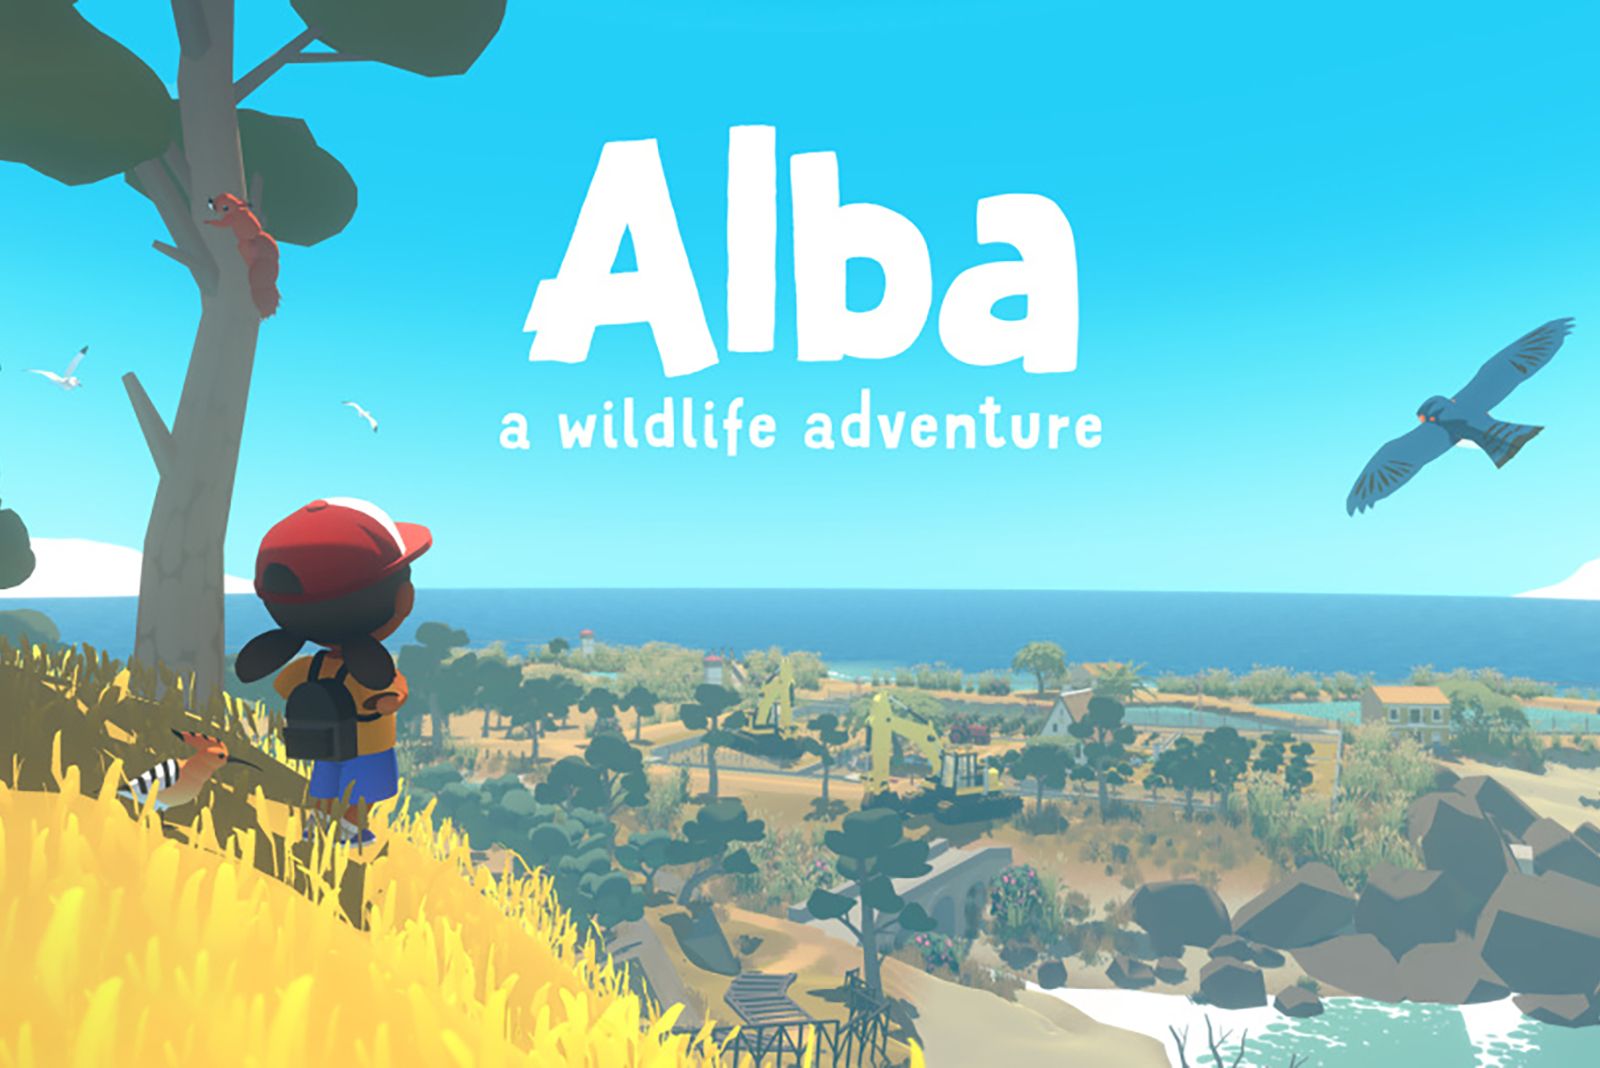 Monument Valley studio teases Alba A Wildlife Adventure